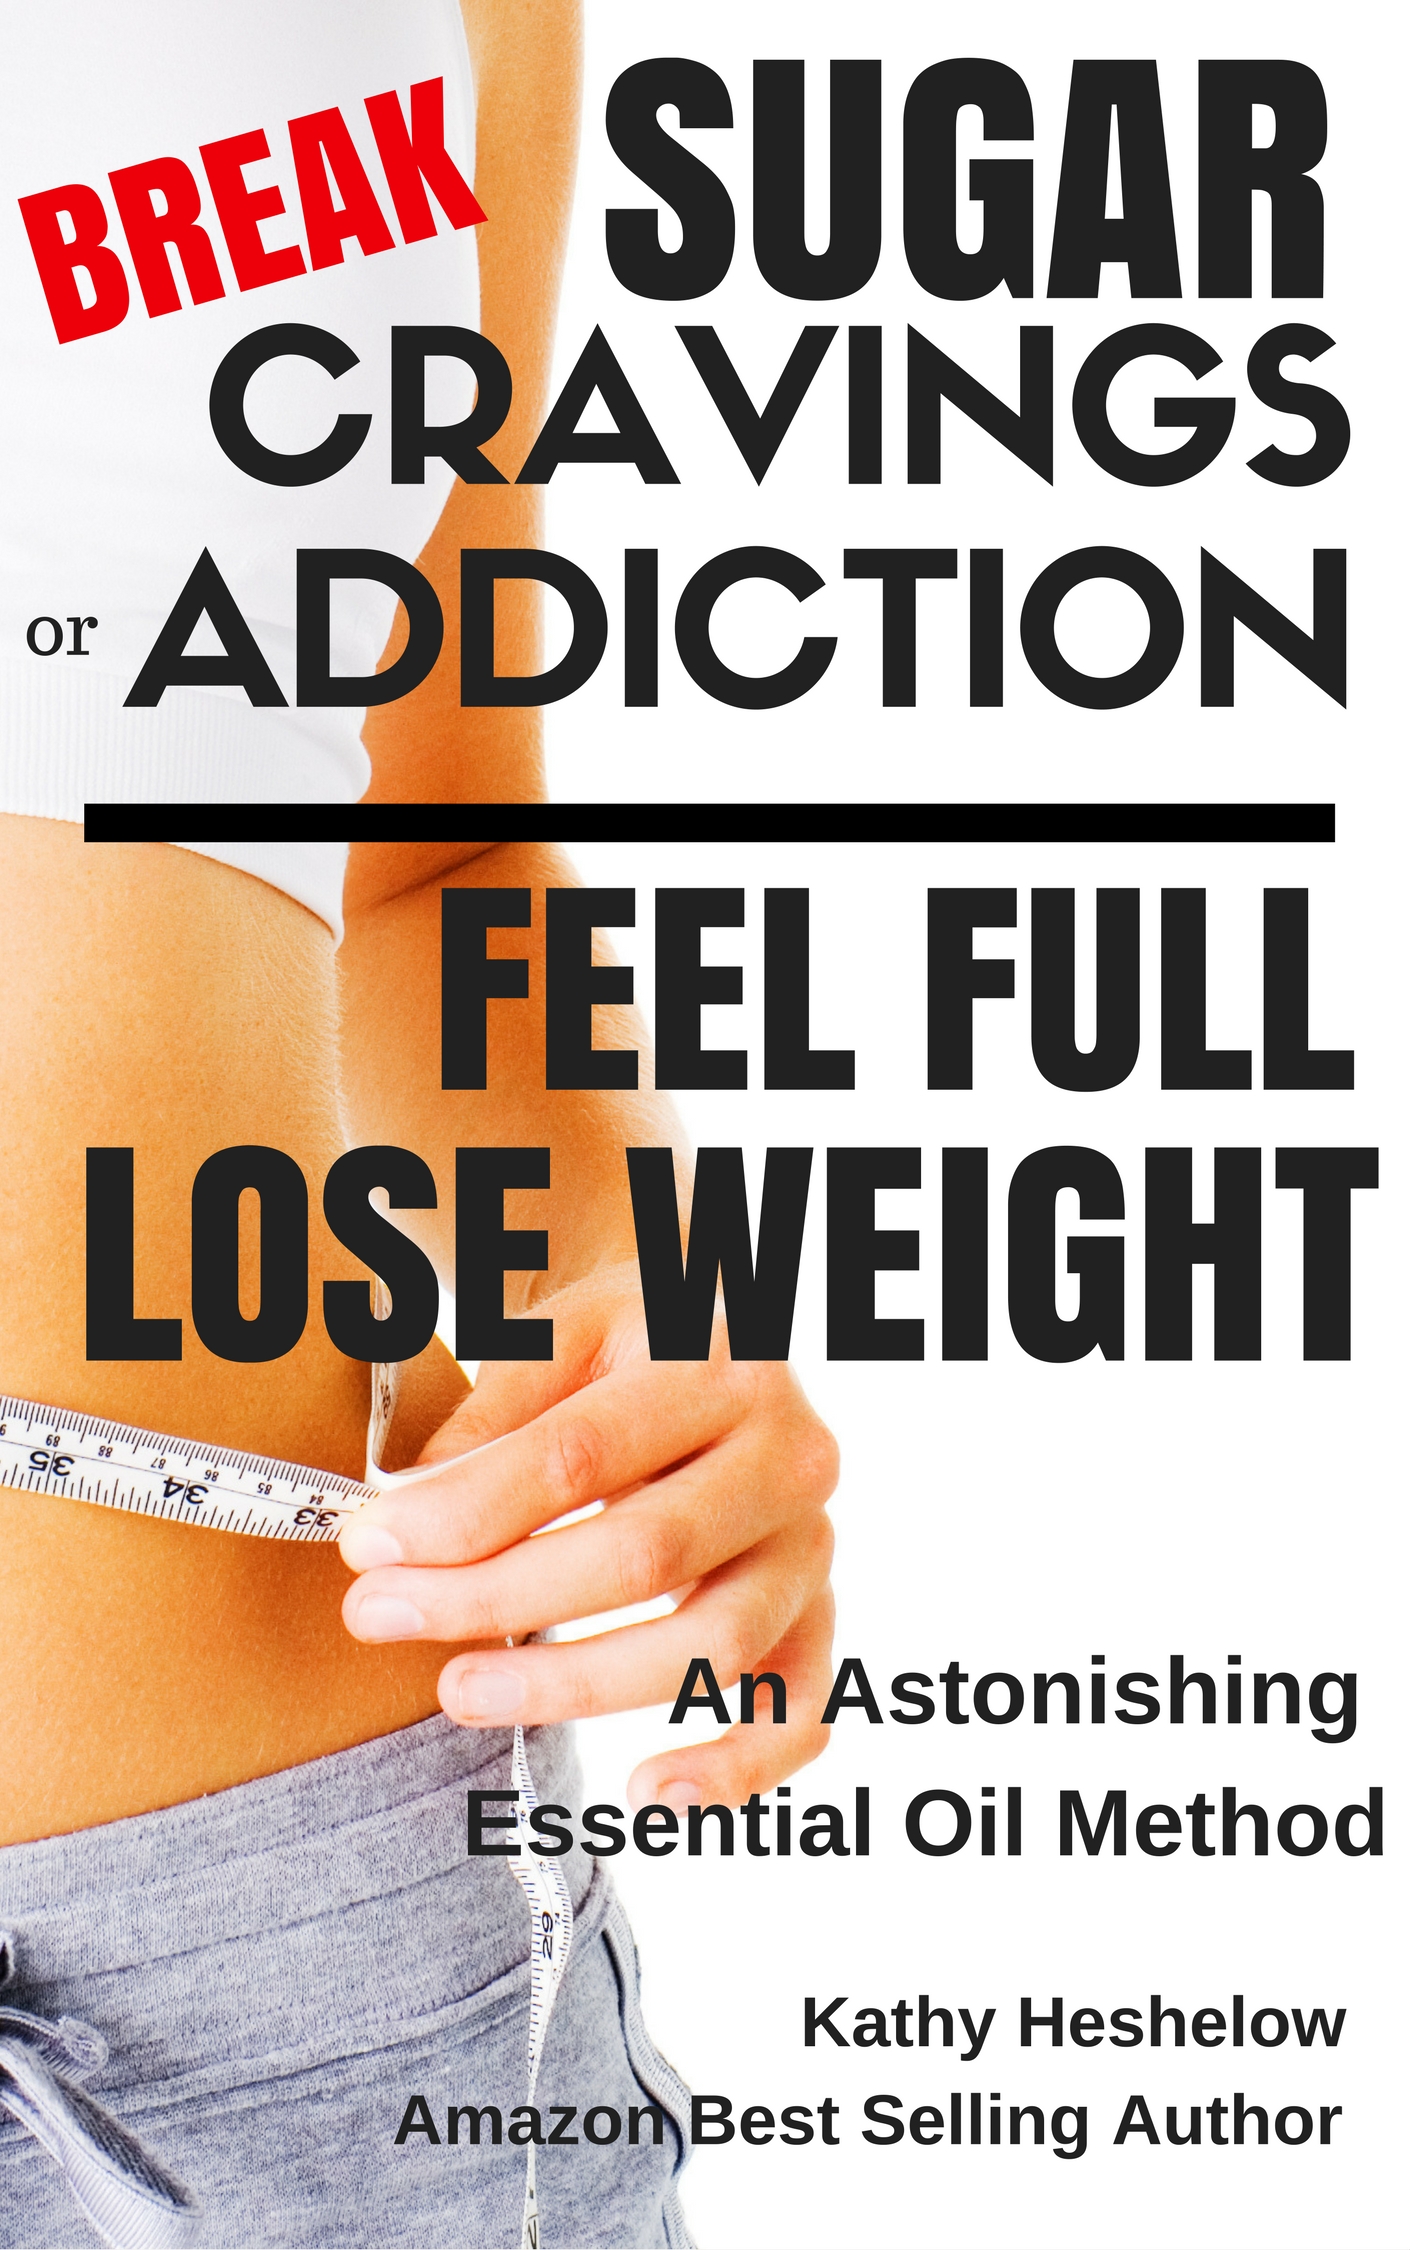 Break Sugar Addiction & Cravings | Books by Kathy Heshelow